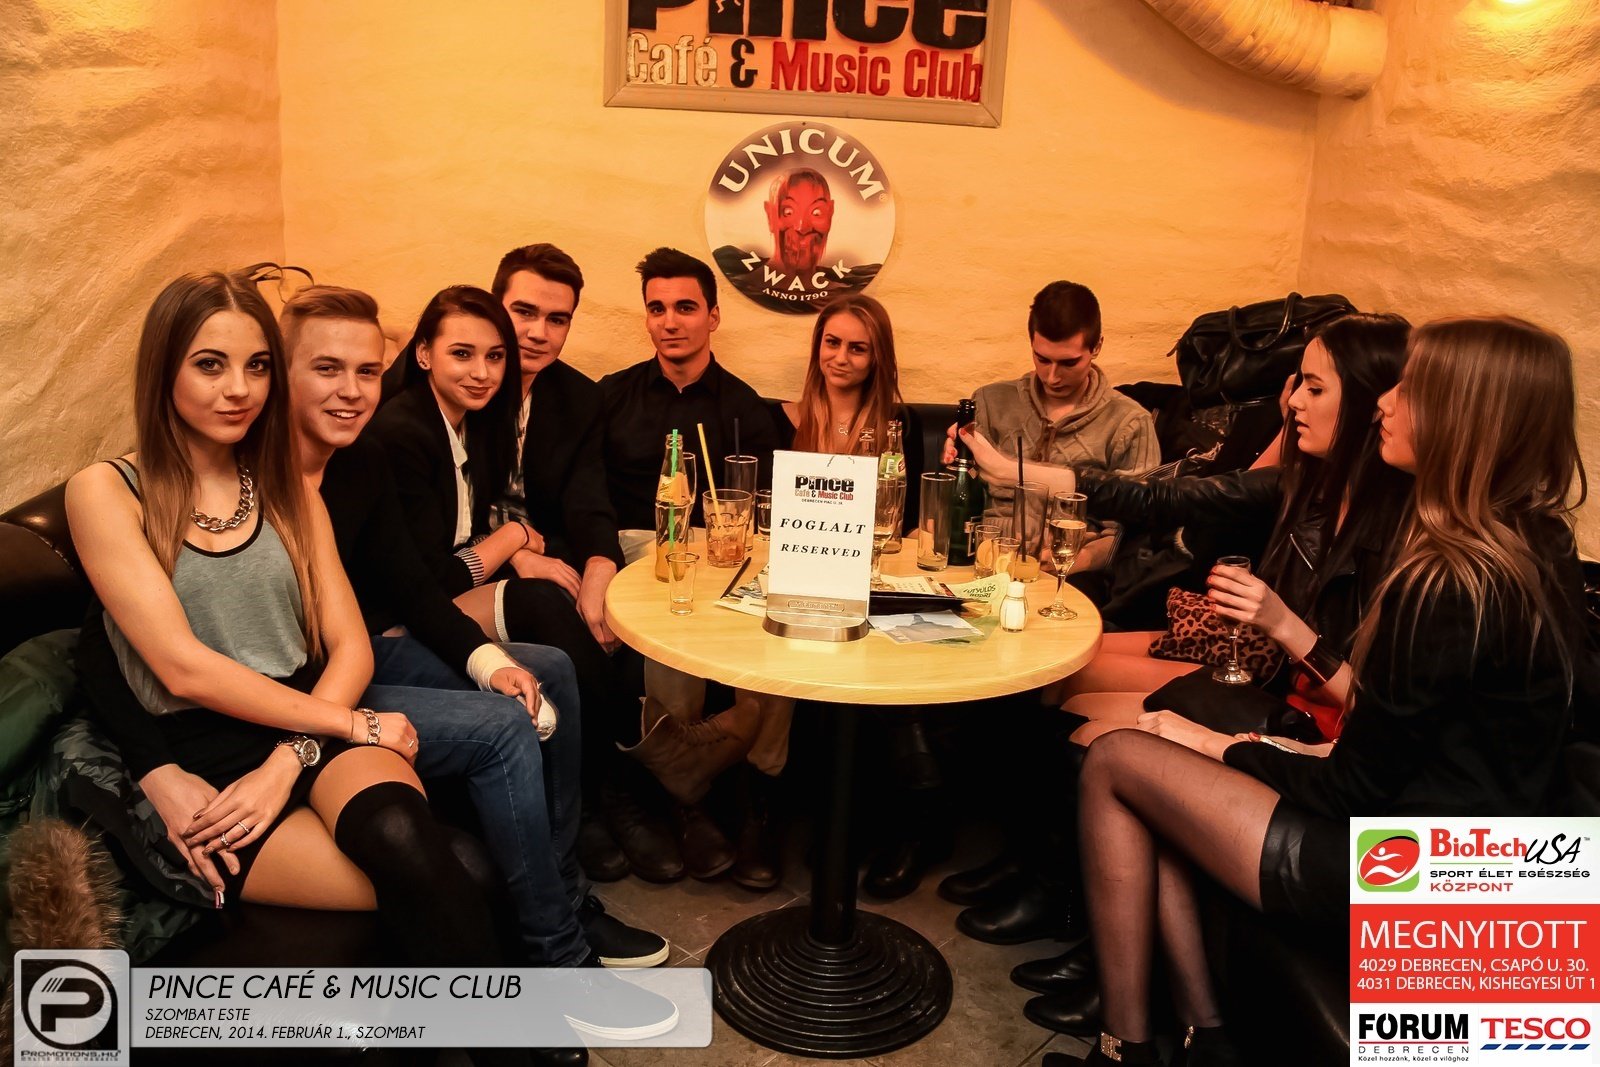 DEBRECEN, PINCE CAFÉ & MUSIC CLUB - 2014- FEBRUÁR 1., SZOMBAT ESTE